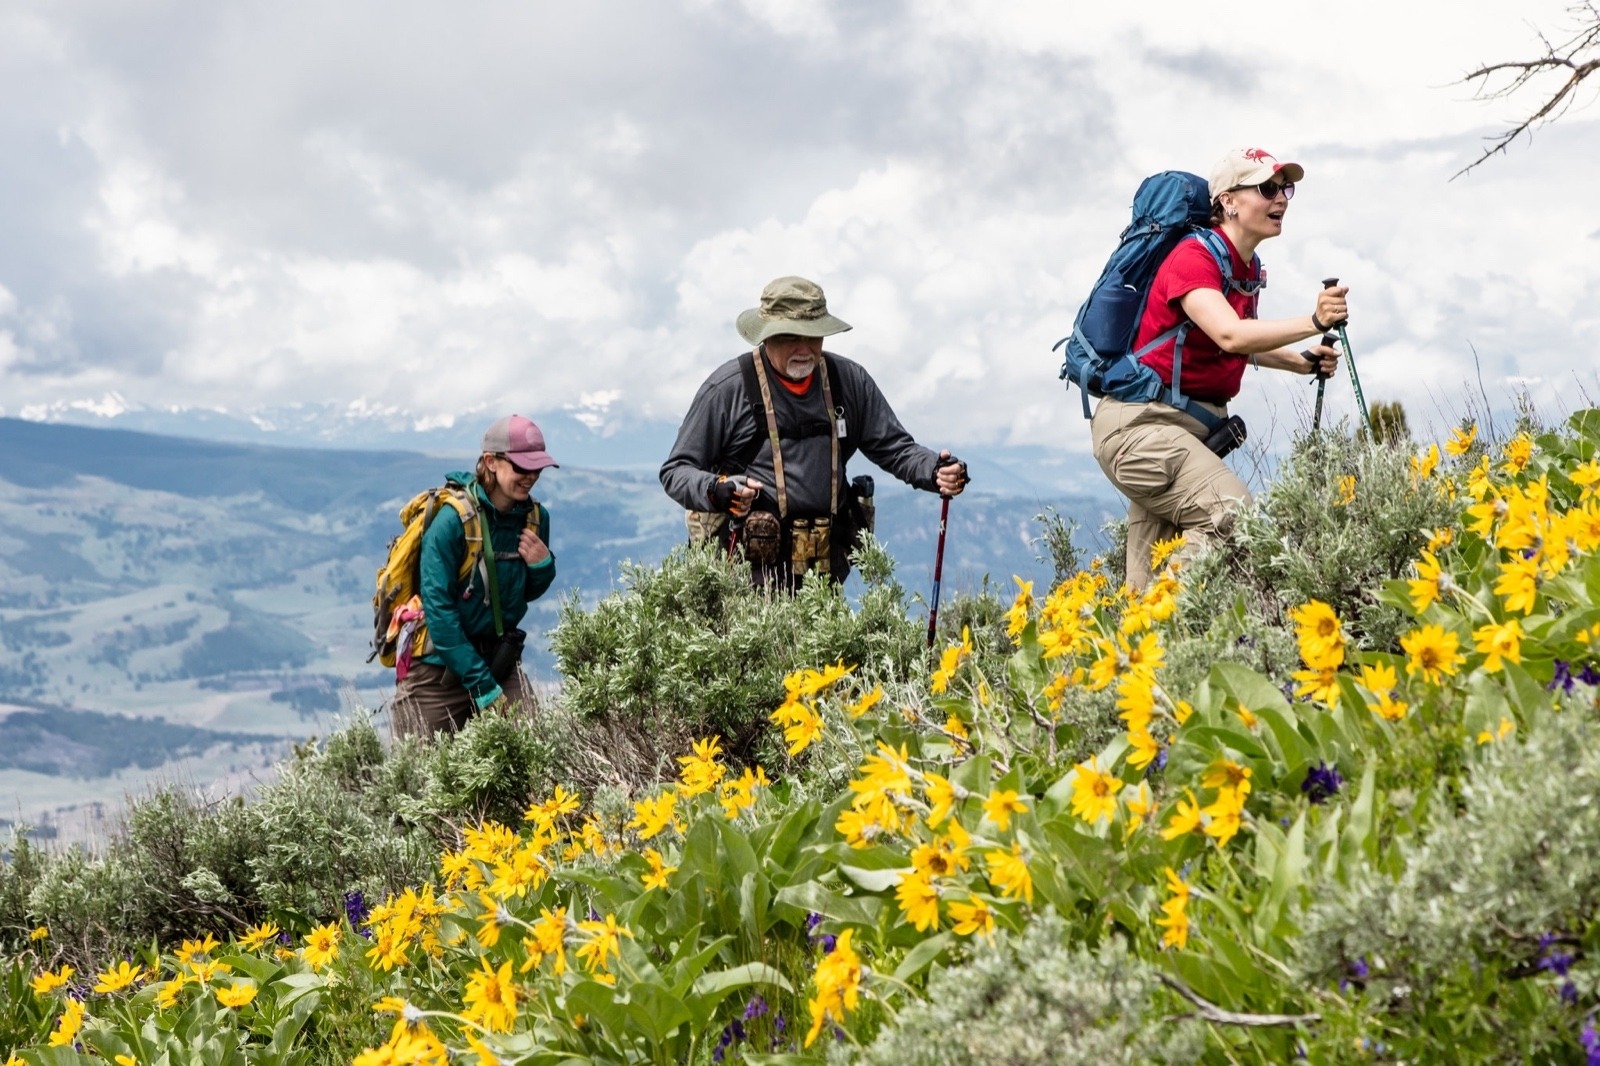 Summer hikers trek through a sub-alpine meadow south of Bozeman. Photo courtesy Jacob W. Frank/NPS